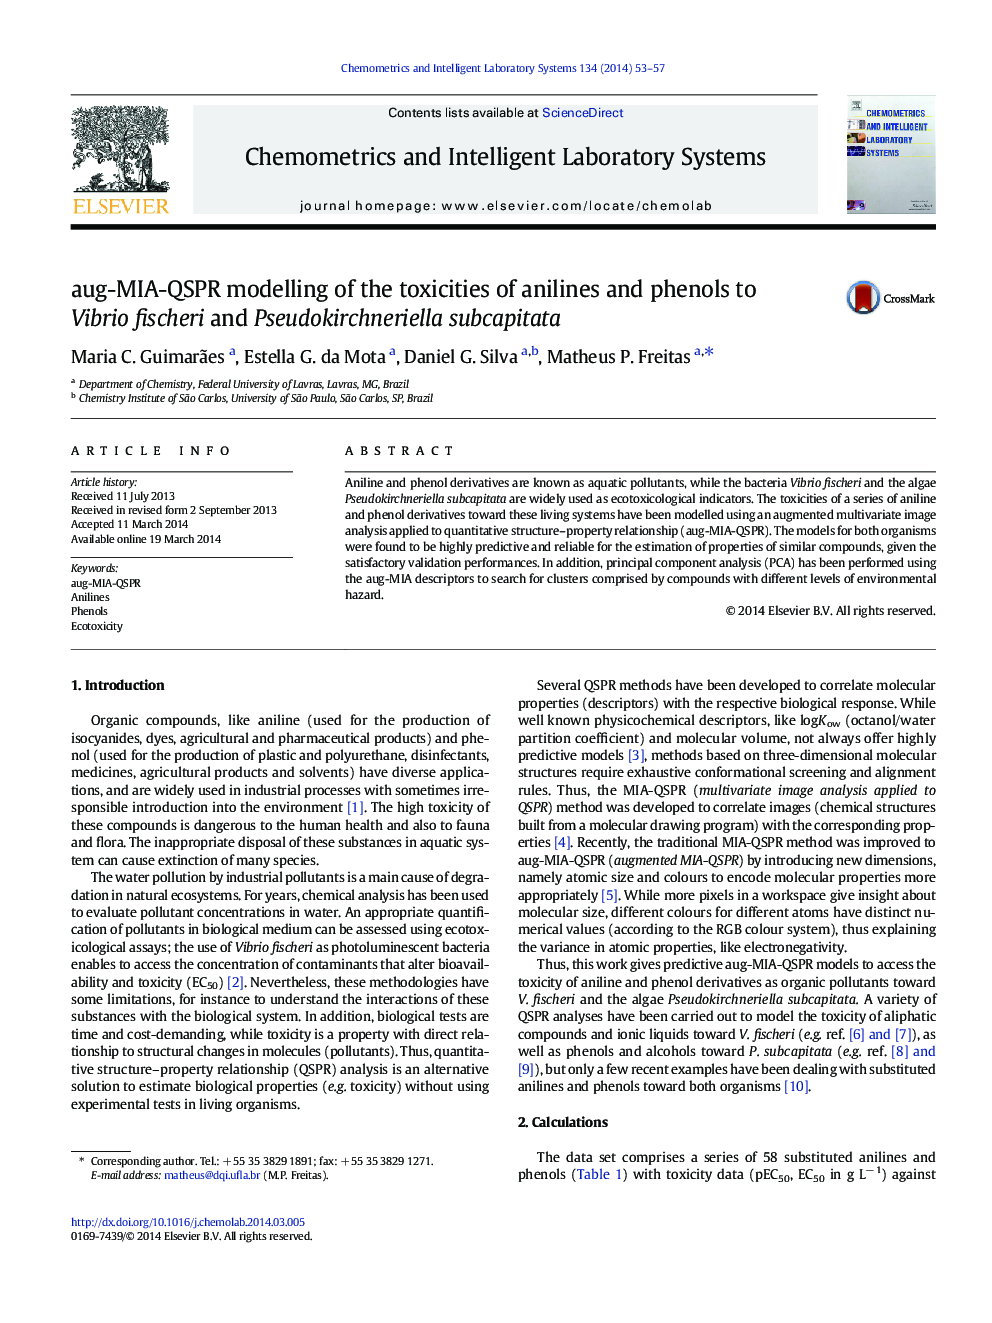 aug-MIA-QSPR modelling of the toxicities of anilines and phenols to Vibrio fischeri and Pseudokirchneriella subcapitata